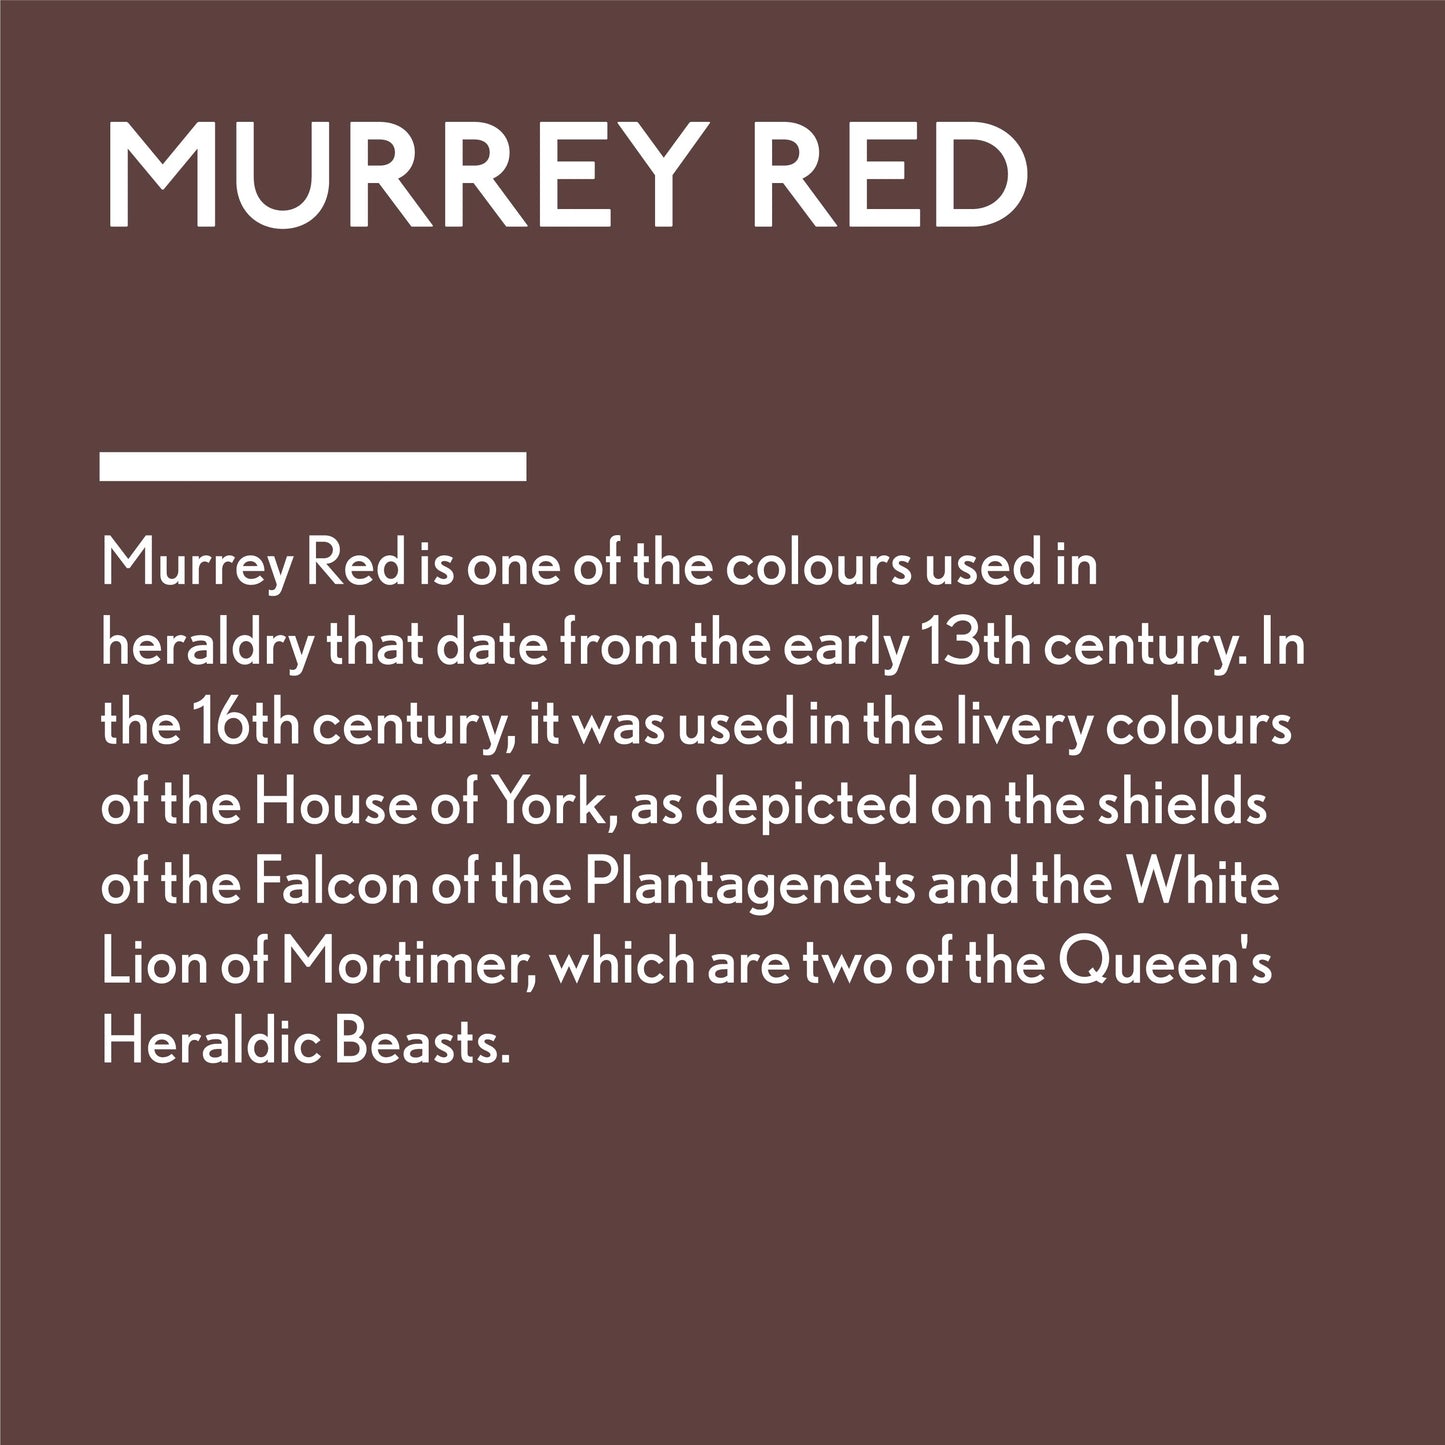 Murrey Red